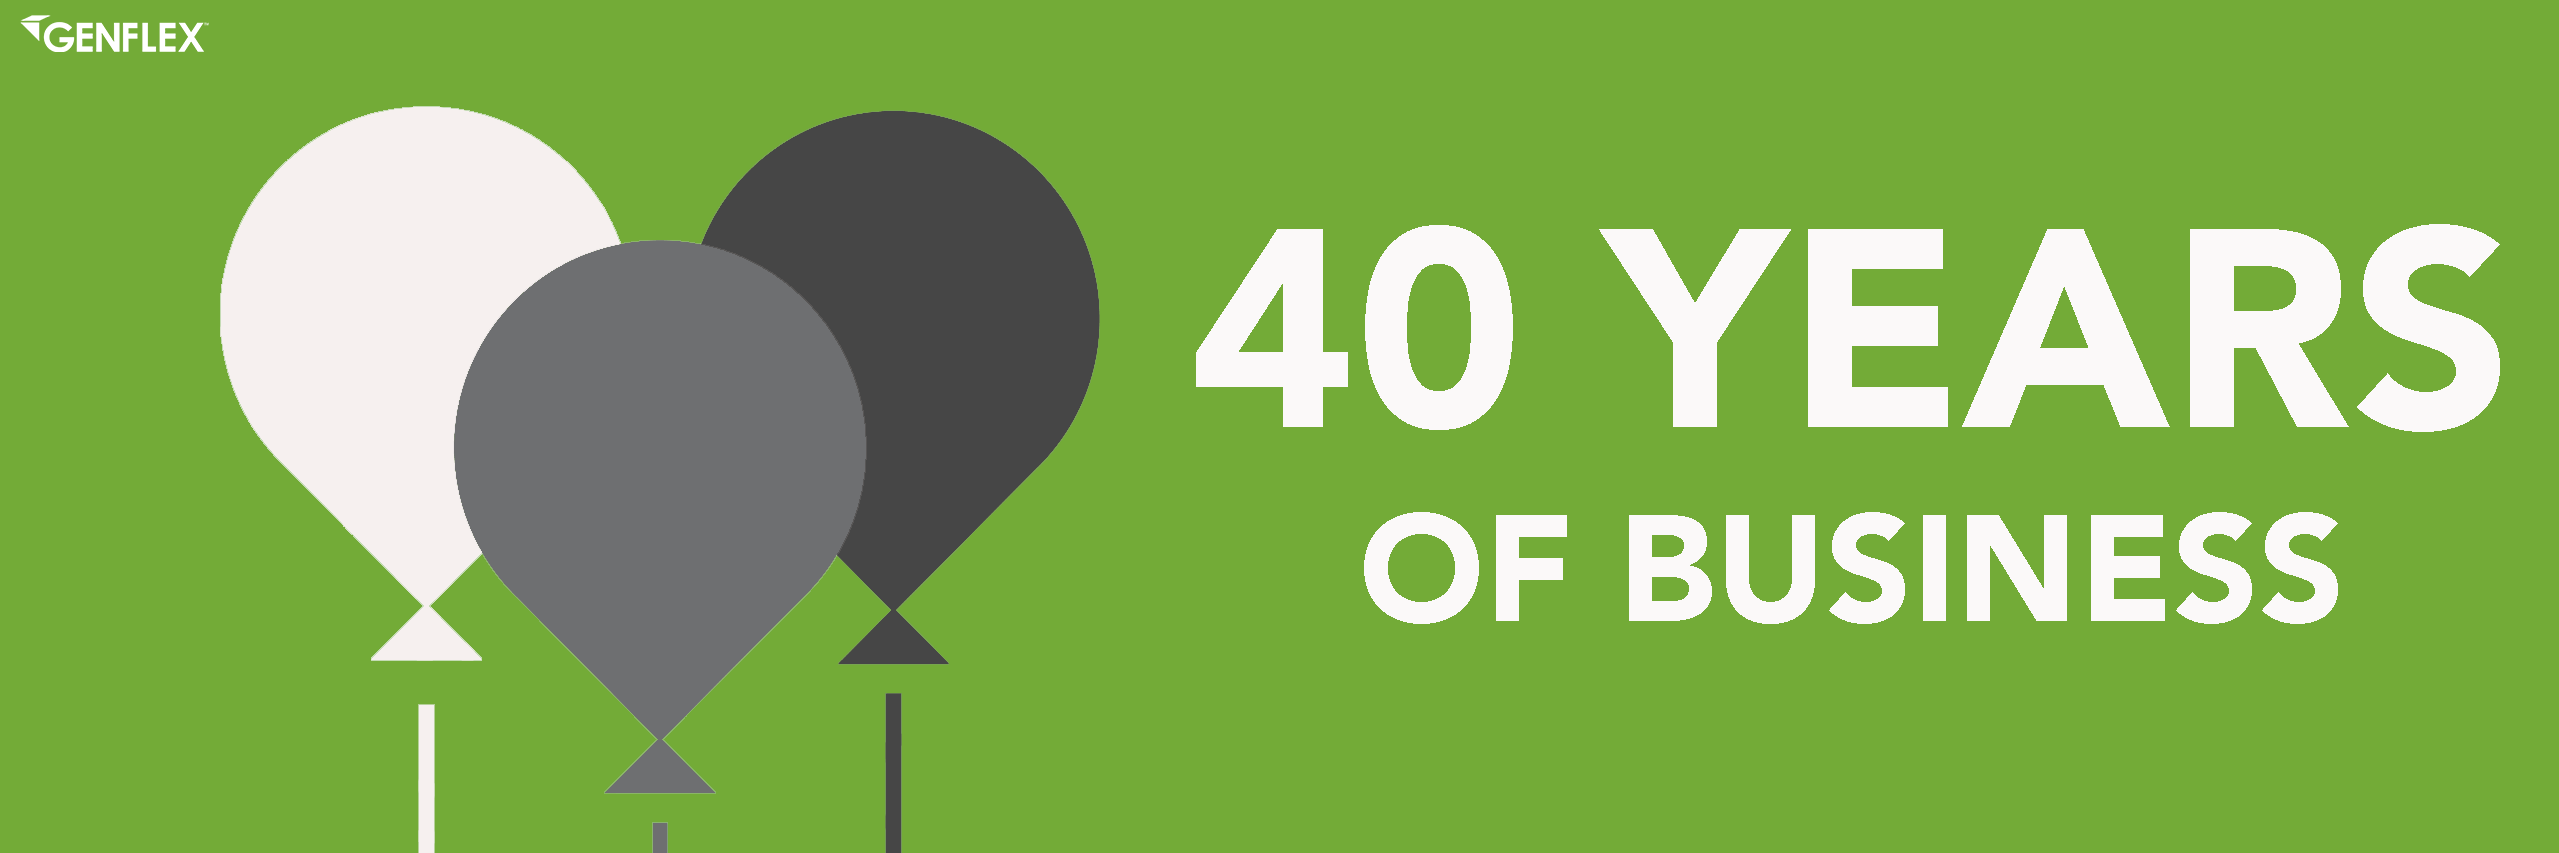 Genflex Celebrates 40 Years Of Business